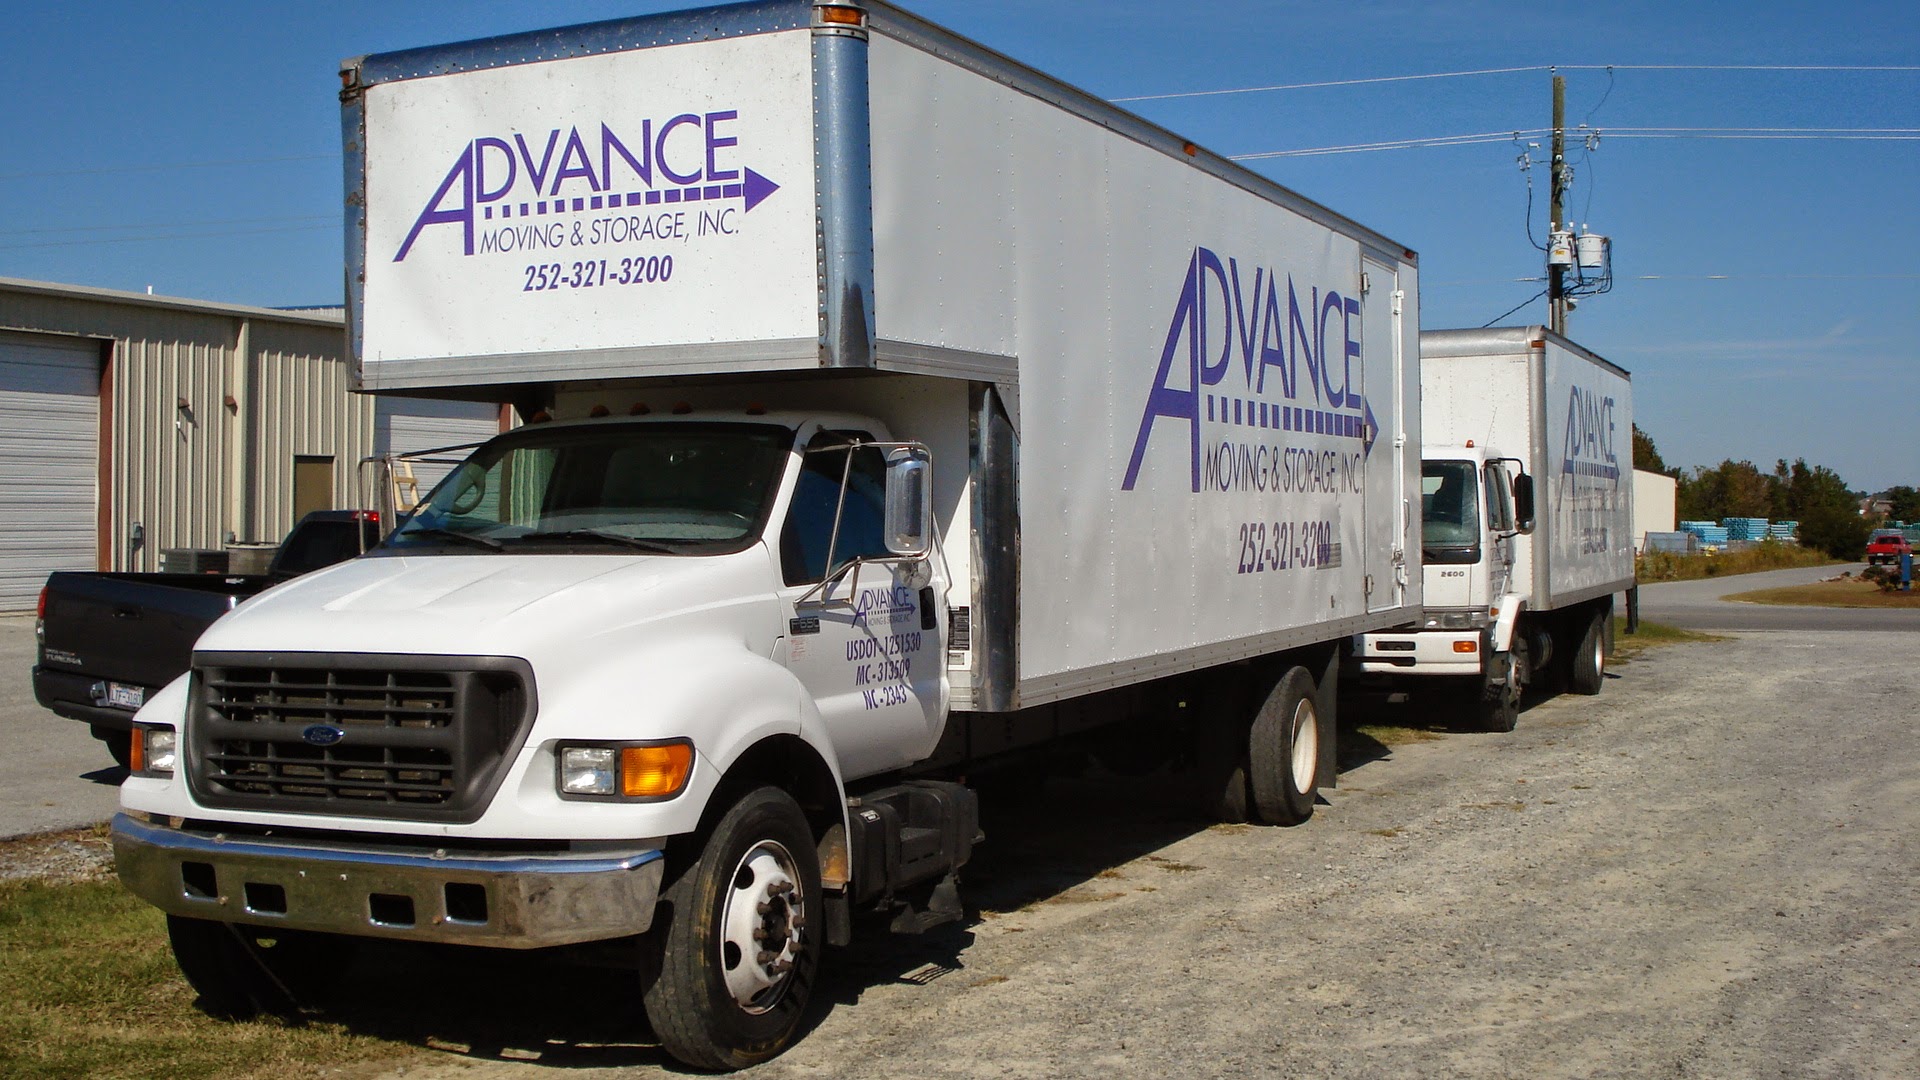 Advance Moving & Storage, Inc